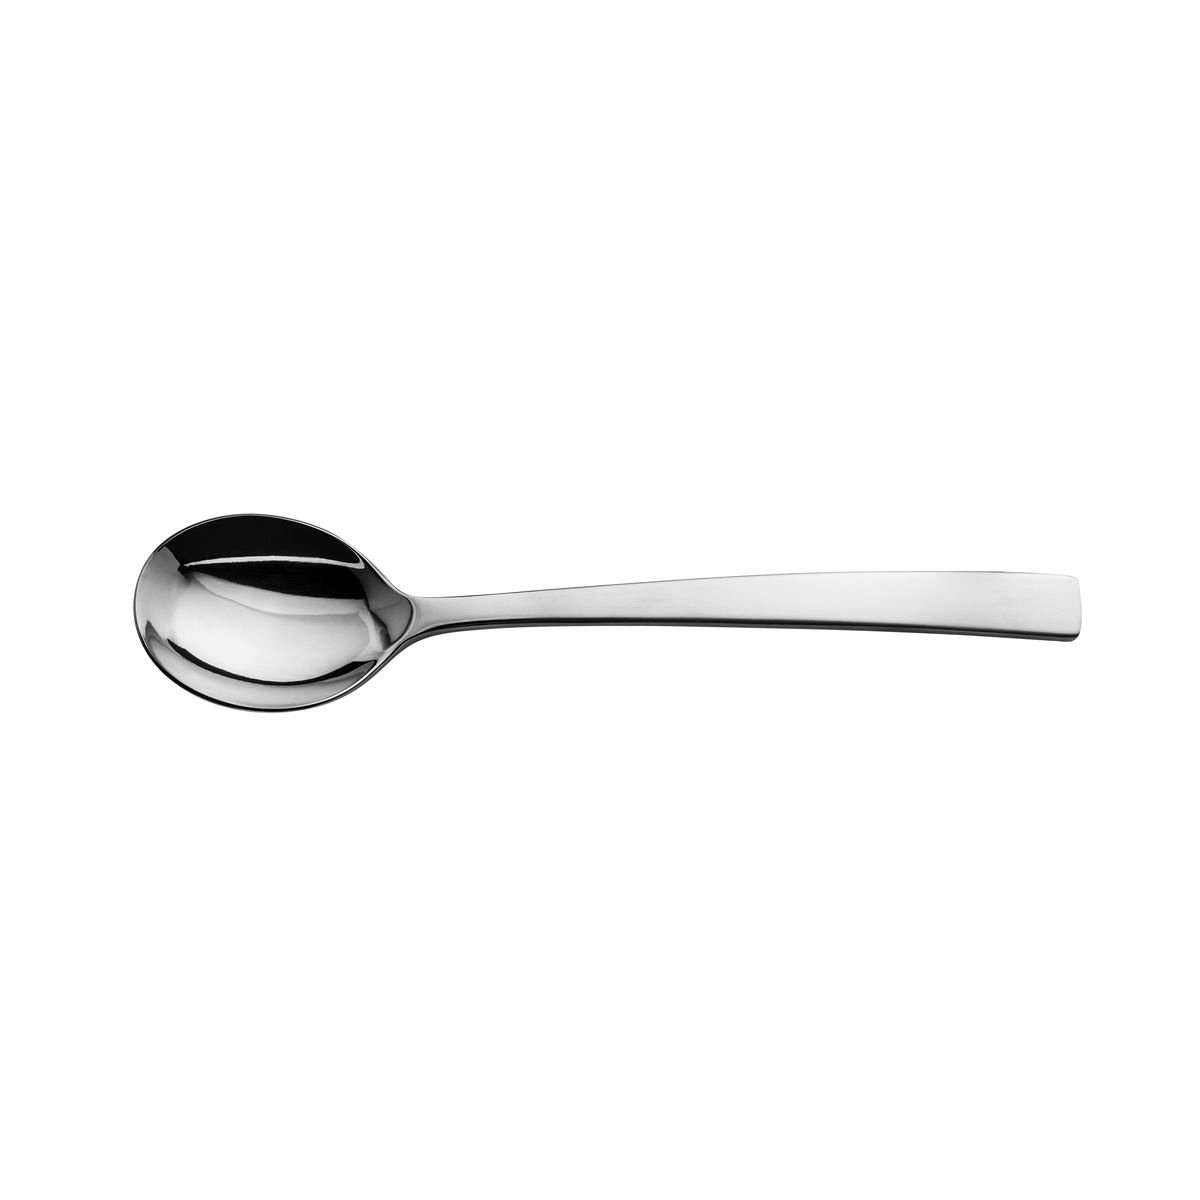 Spoon Soup Torino